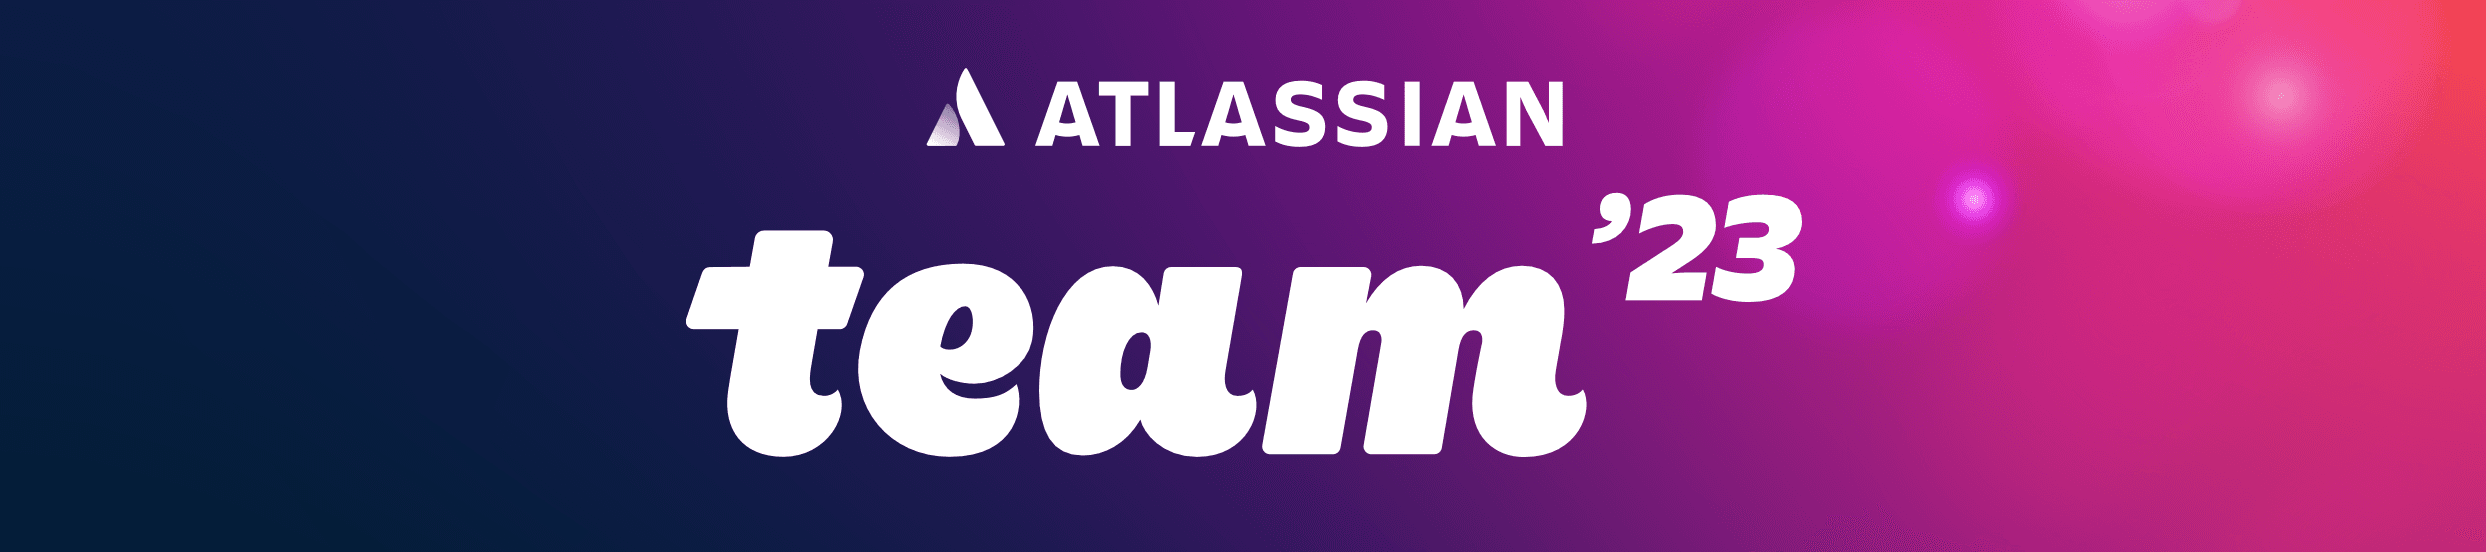 Atlassian-team-23-banner.png